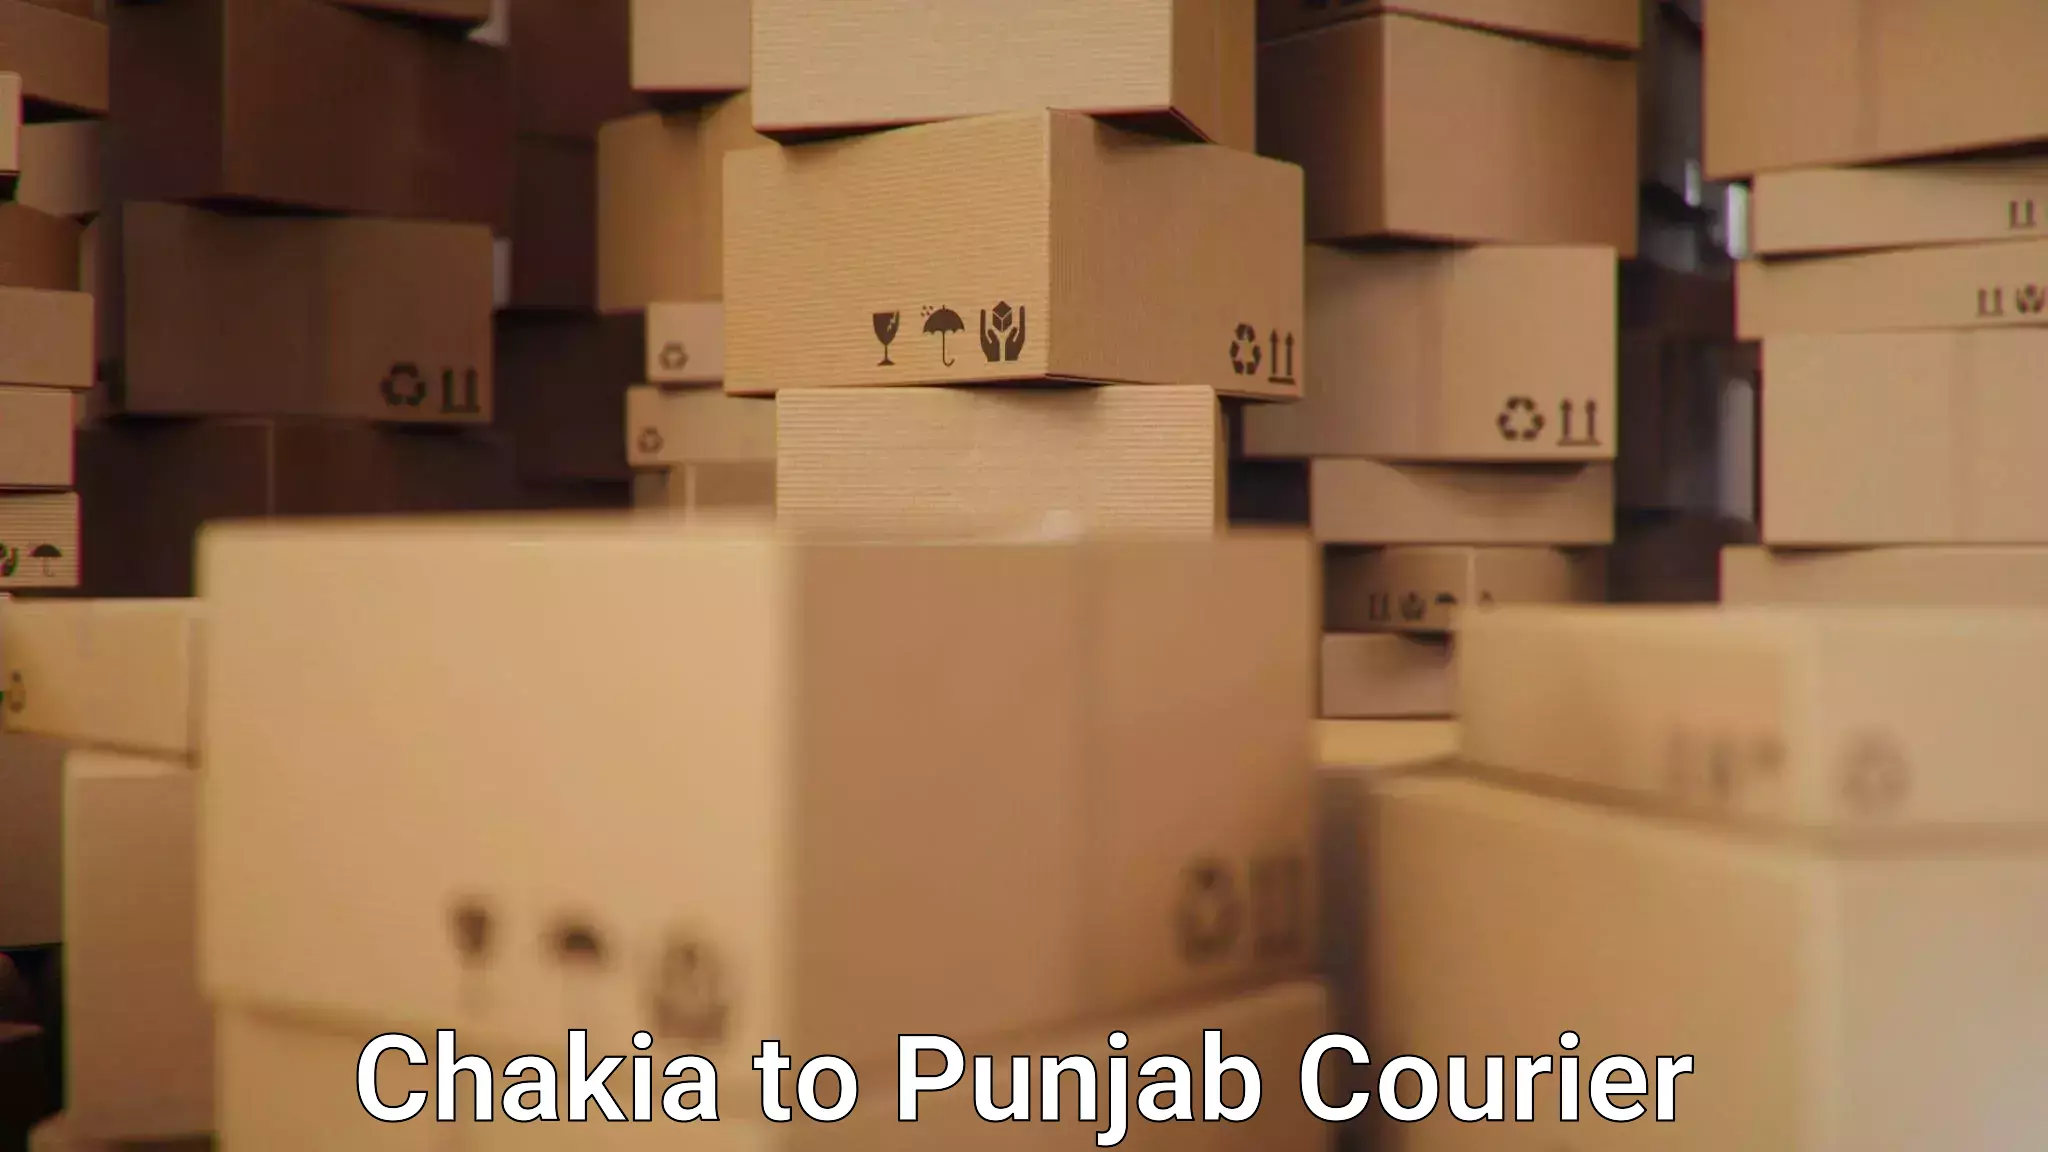 Global shipping solutions Chakia to Punjab